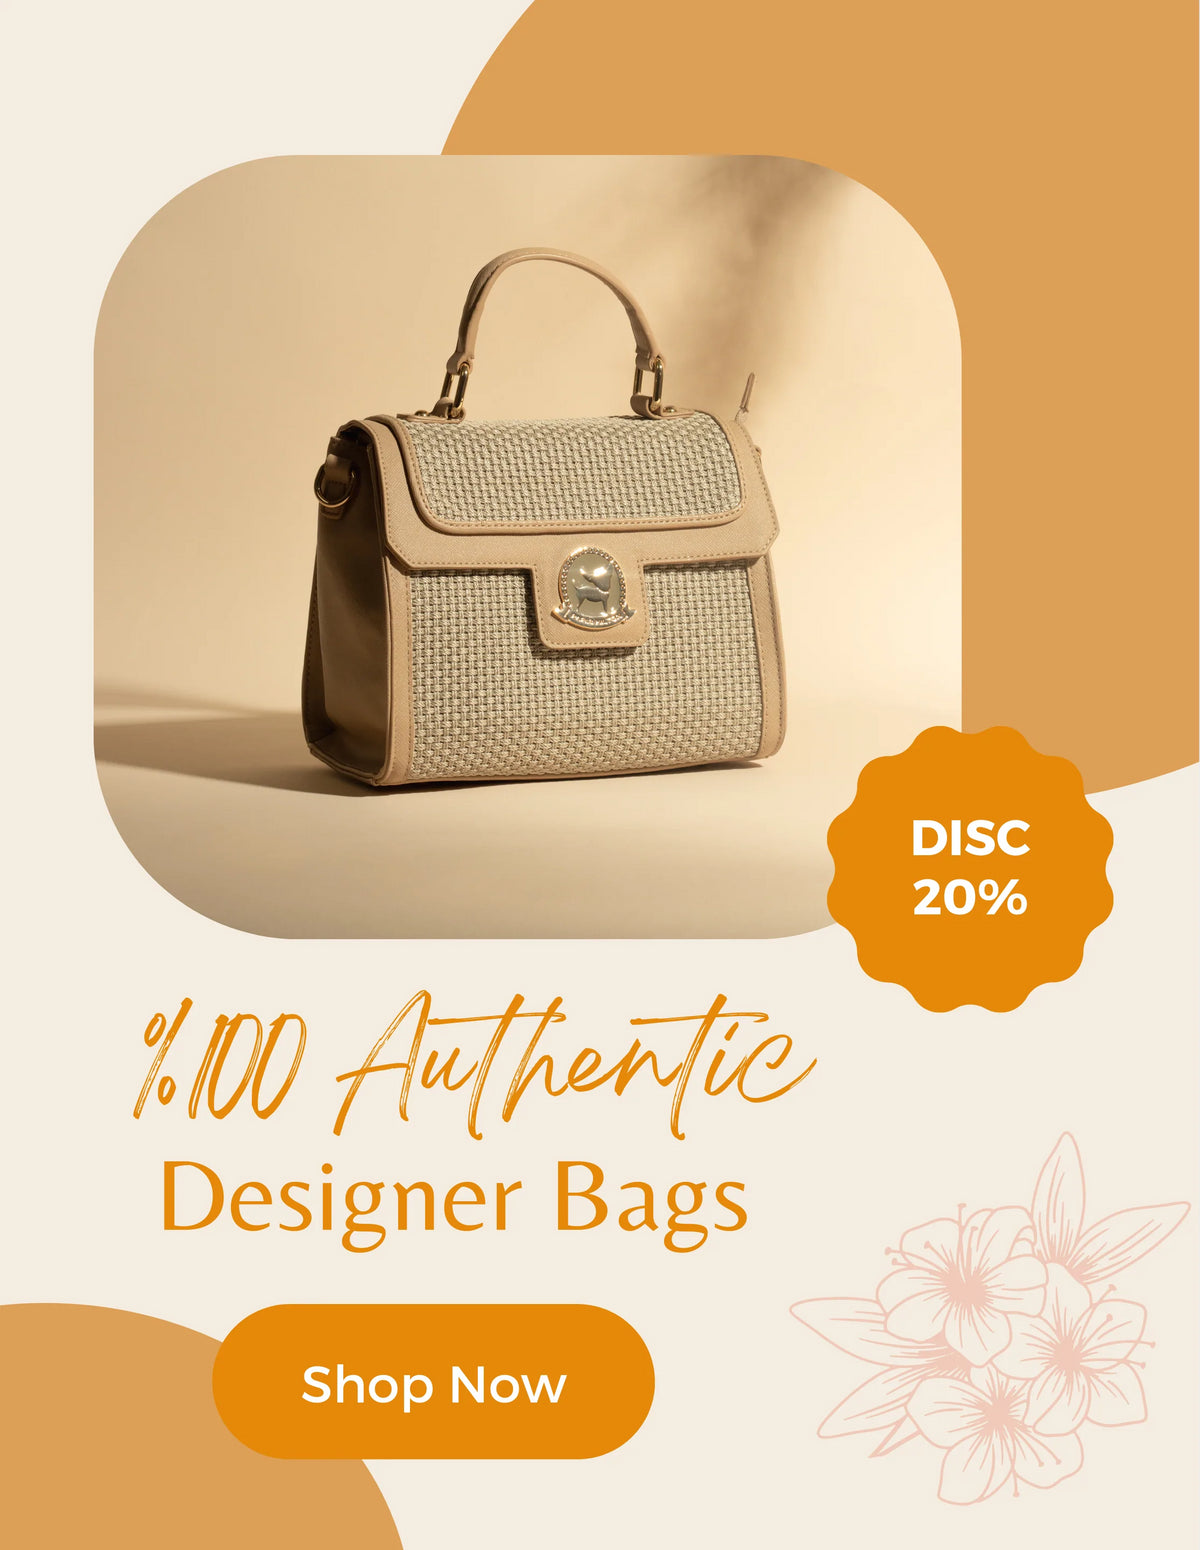 Gucci-Louis-Vuitton-Prada-Dior-LV-Versace-Chanel-Fendi-Coach-Cartier-Ysl- Tote Fashion Shopping Bags Factory in China - China Handbags and Bags price